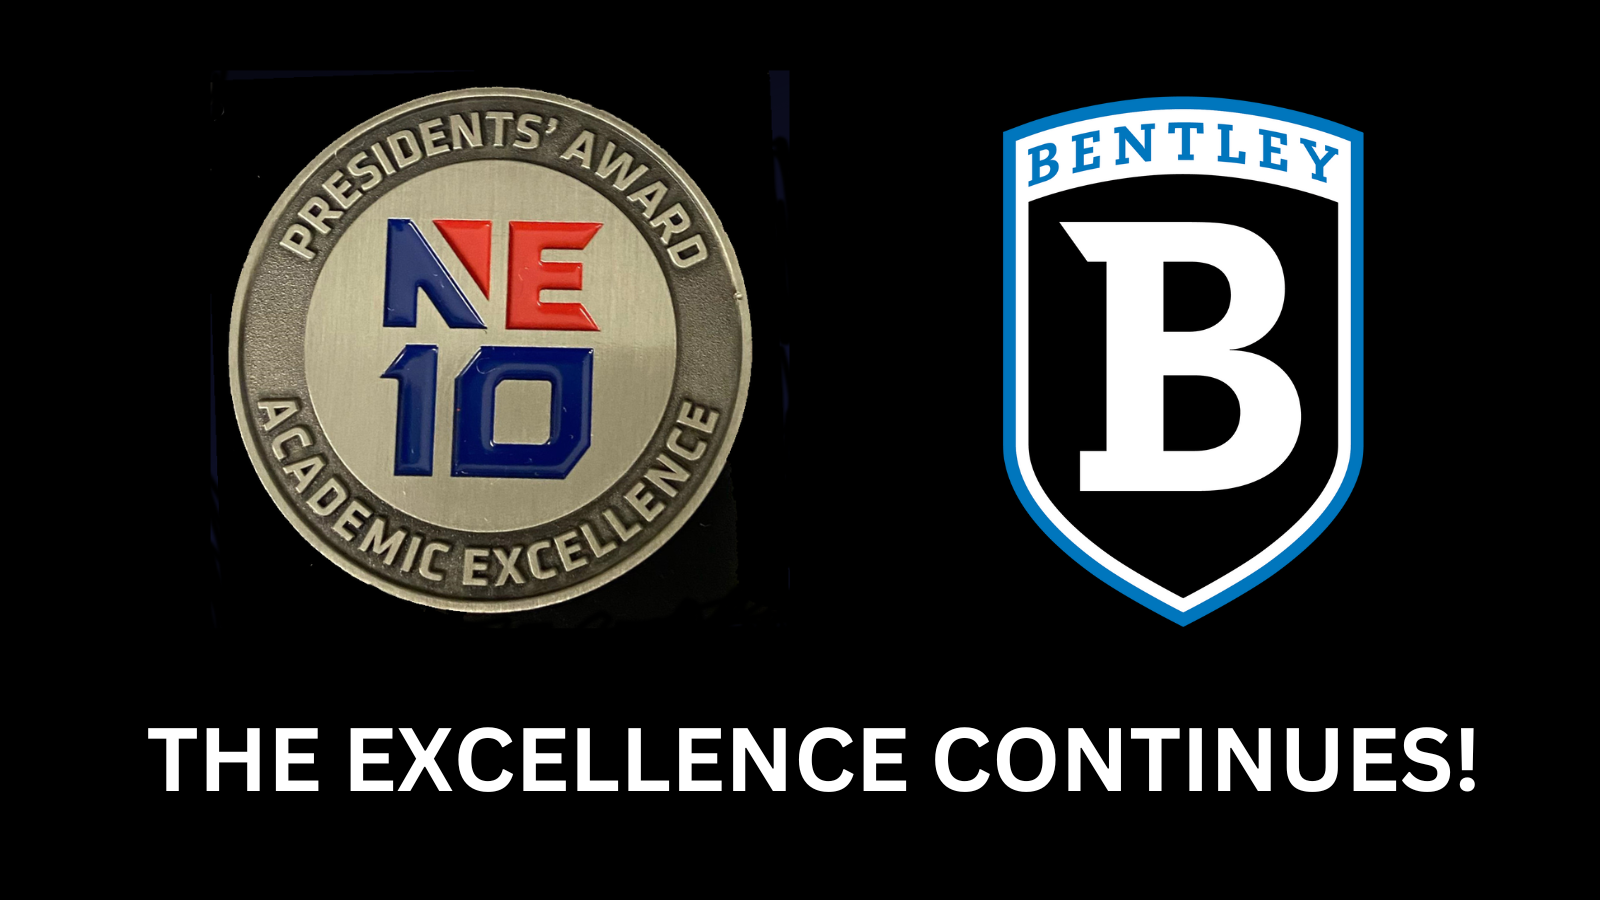 28 Falcons receive NE10 Presidents' Award for Academic Excellence